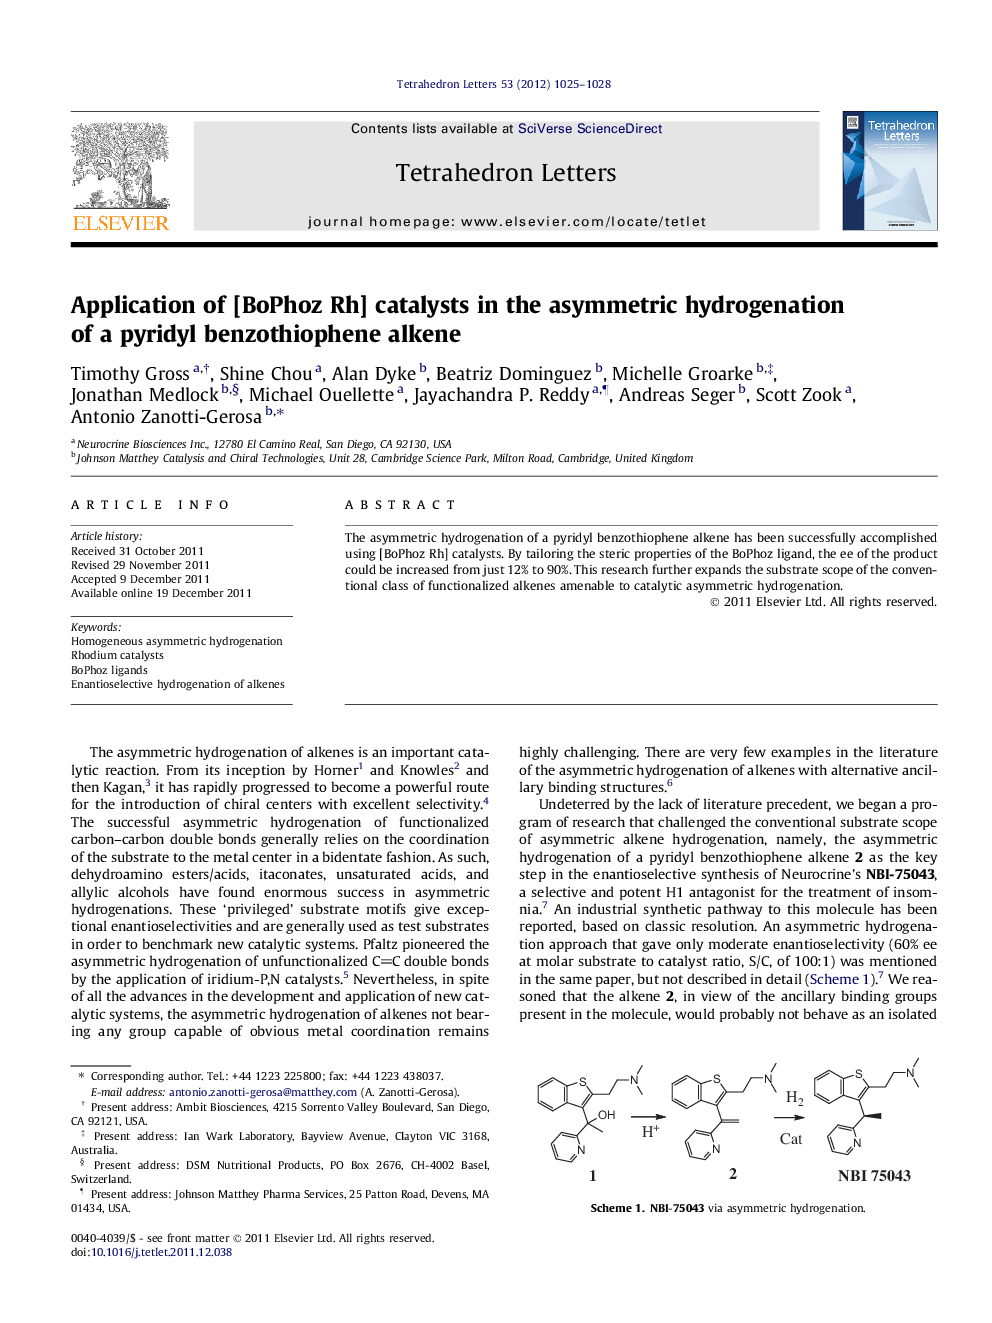 Application of [BoPhoz Rh] catalysts in the asymmetric hydrogenation of a pyridyl benzothiophene alkene